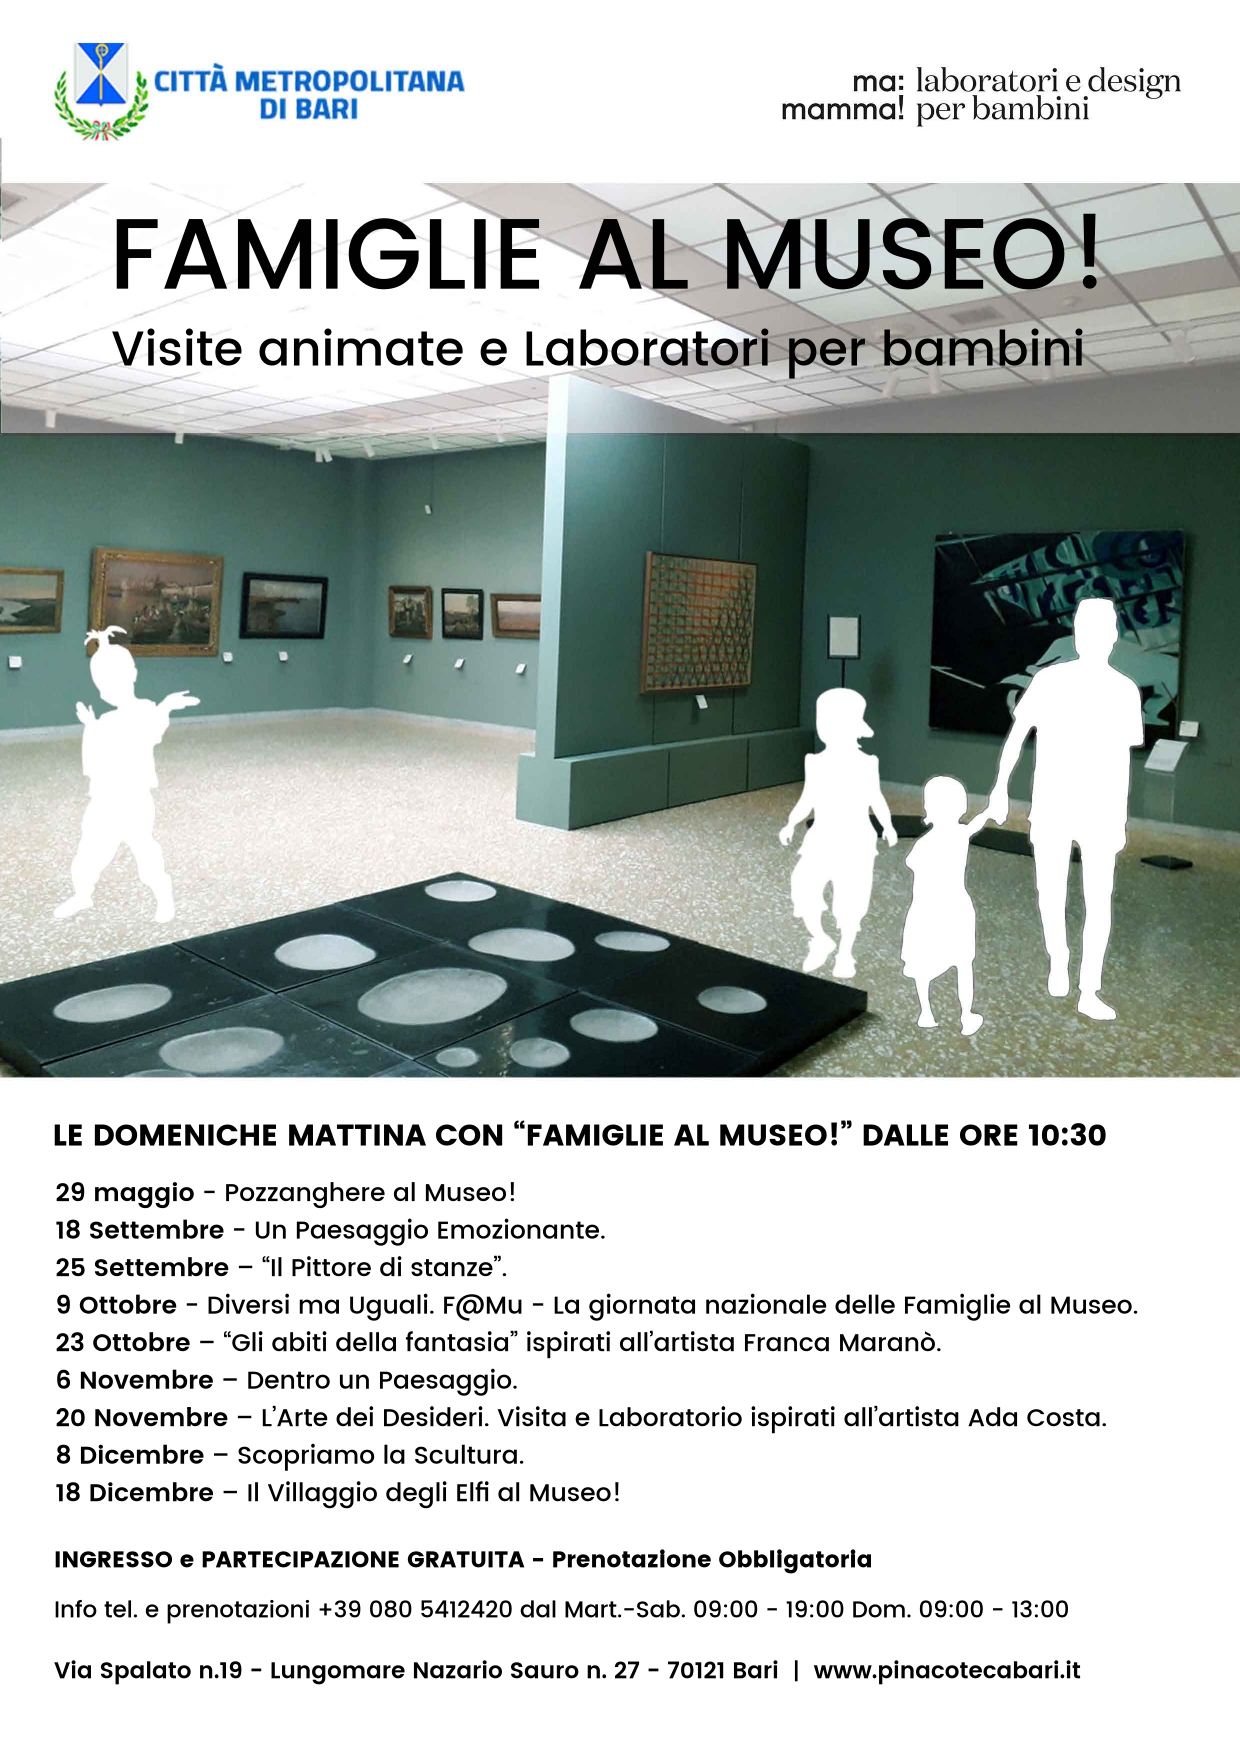 LOCANDINA FAMIGLIE AL MUSEO Pinacoteca di Bari